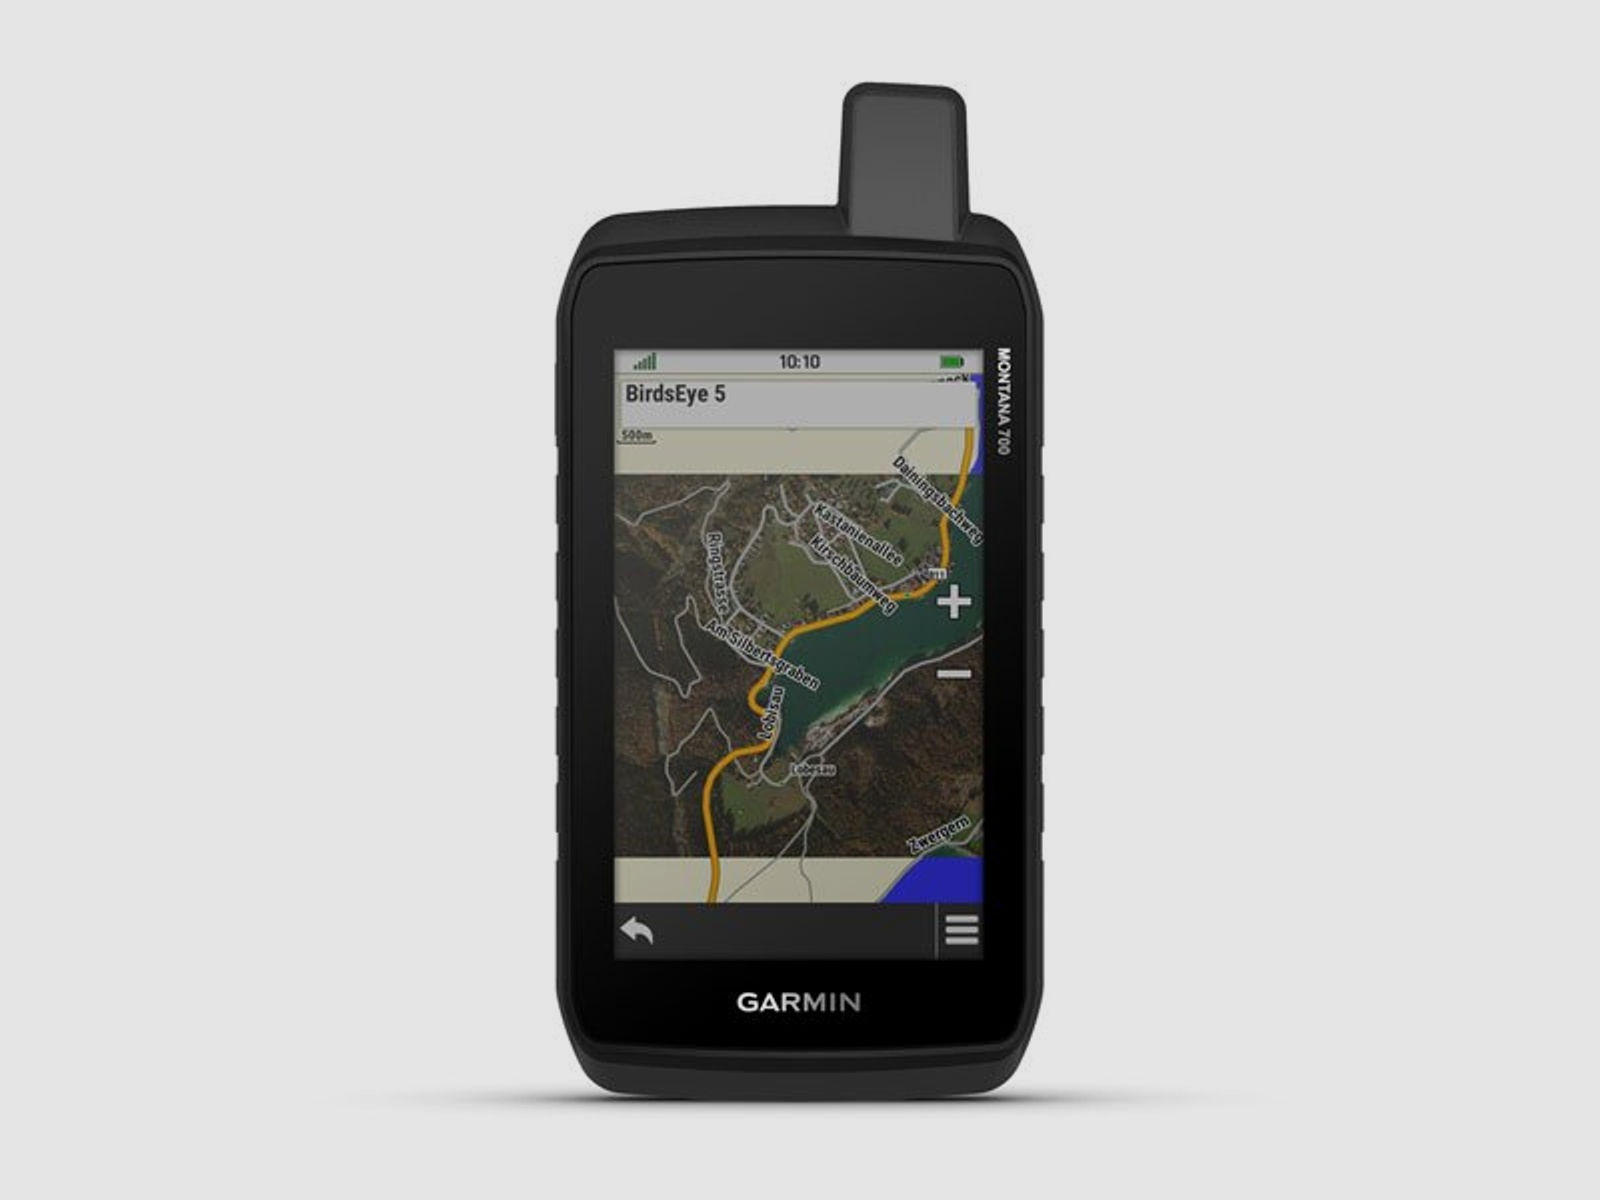 Garmin Montana 700 Navigationsgerät